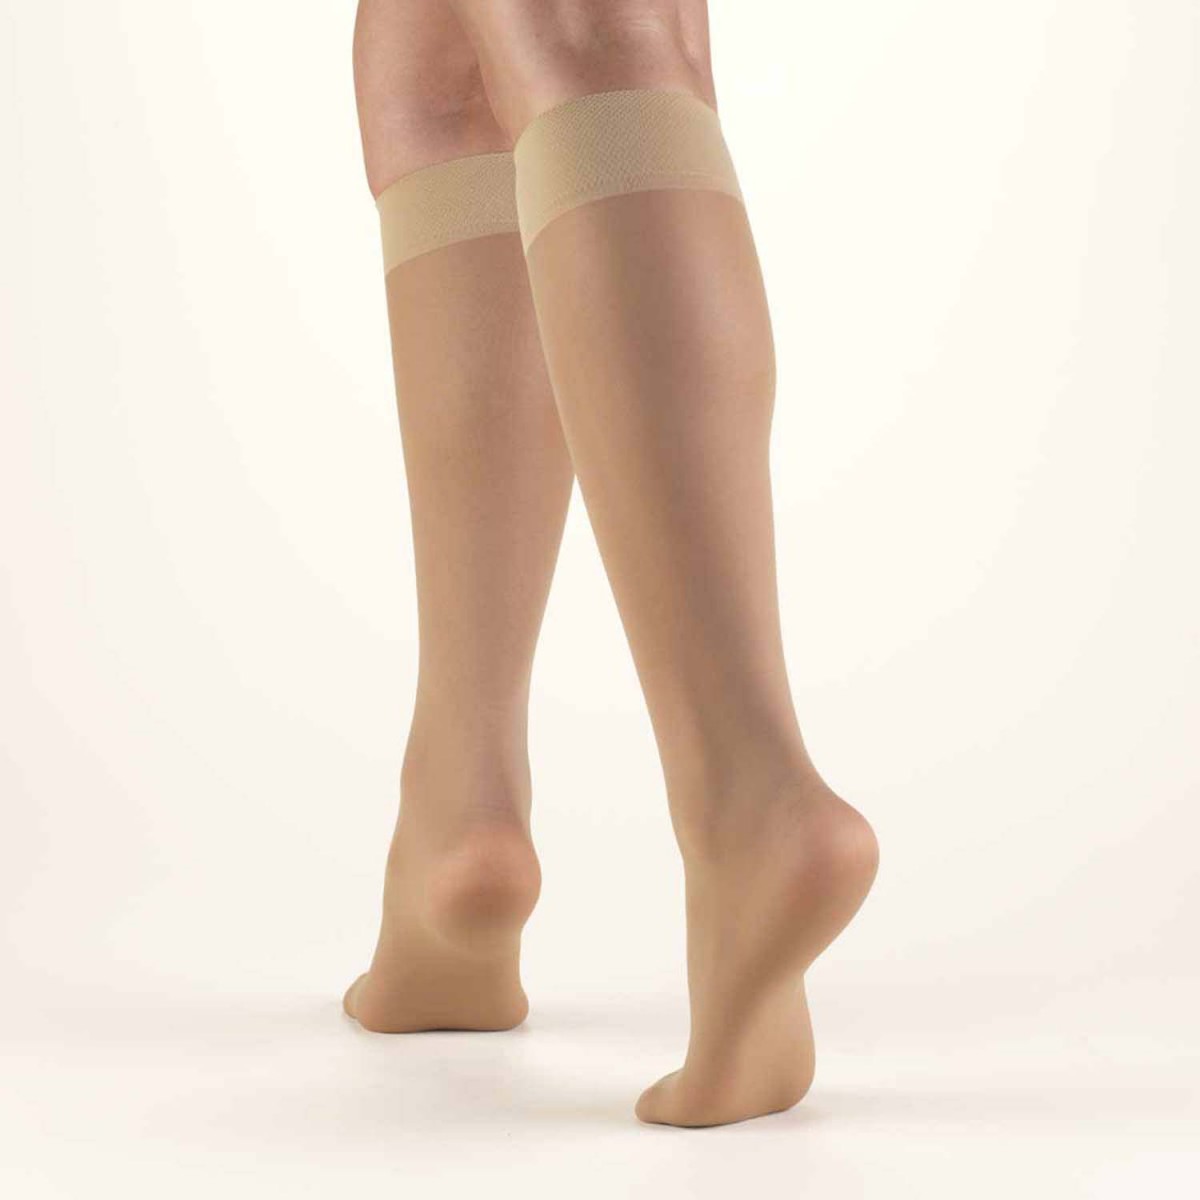 Sanyleg Κάλτσες κάτω γόνατος ελαστικές "Knee High" C01 40 den (8-10 mm/Hg) Μπεζ 